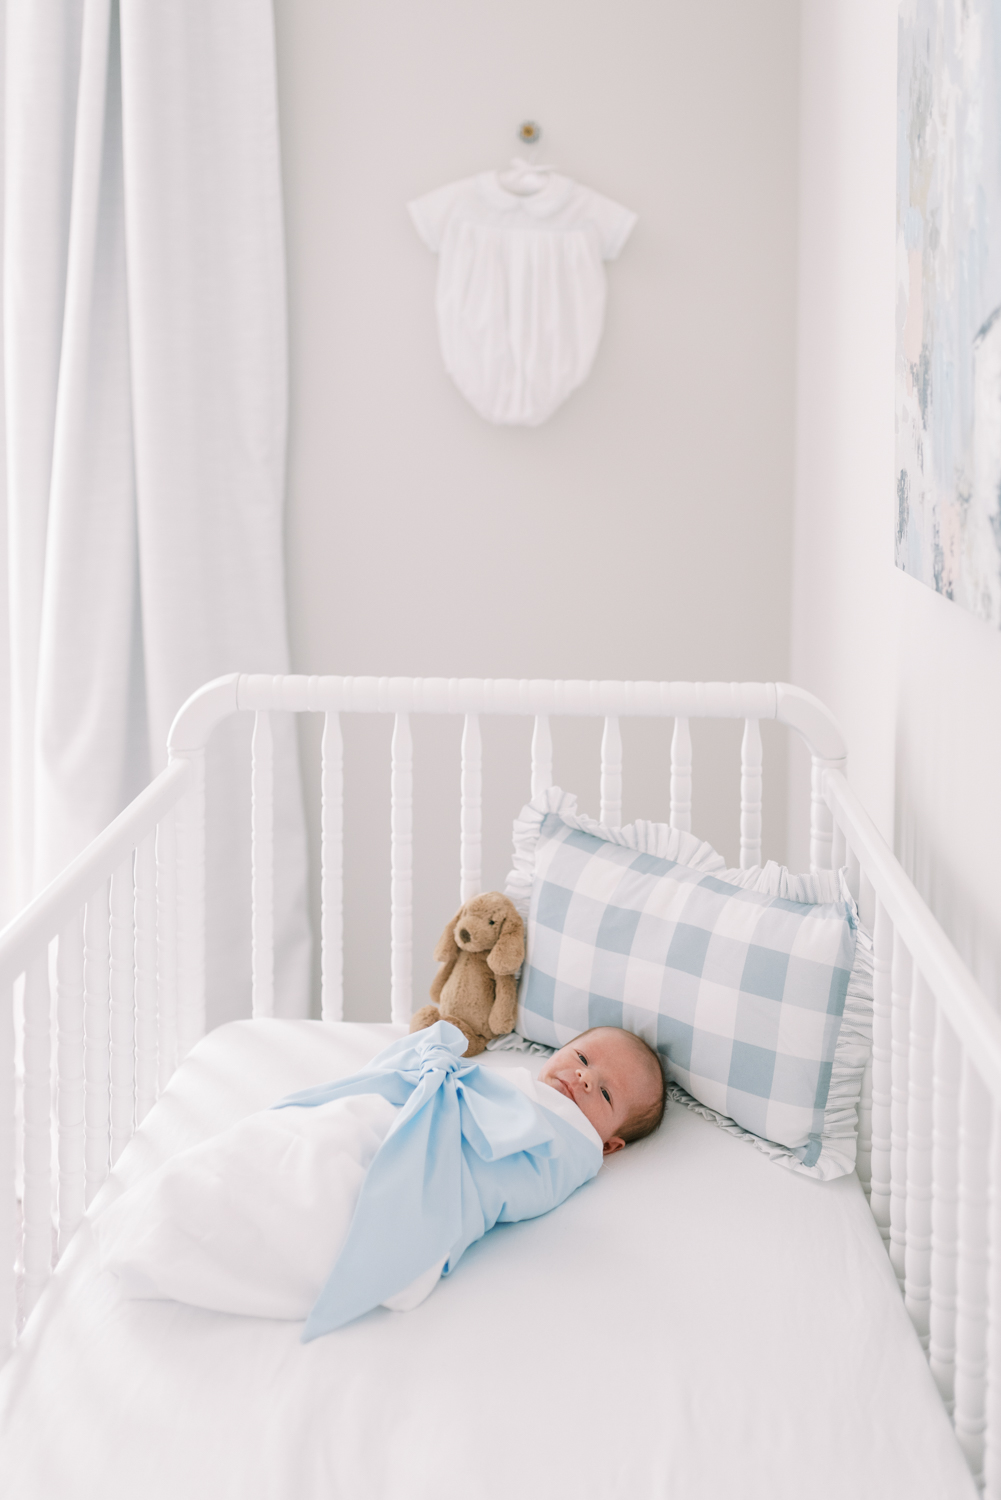 Lifestyle Newborn Session Preparation Guide - Baby boy laying in crib - White nursery